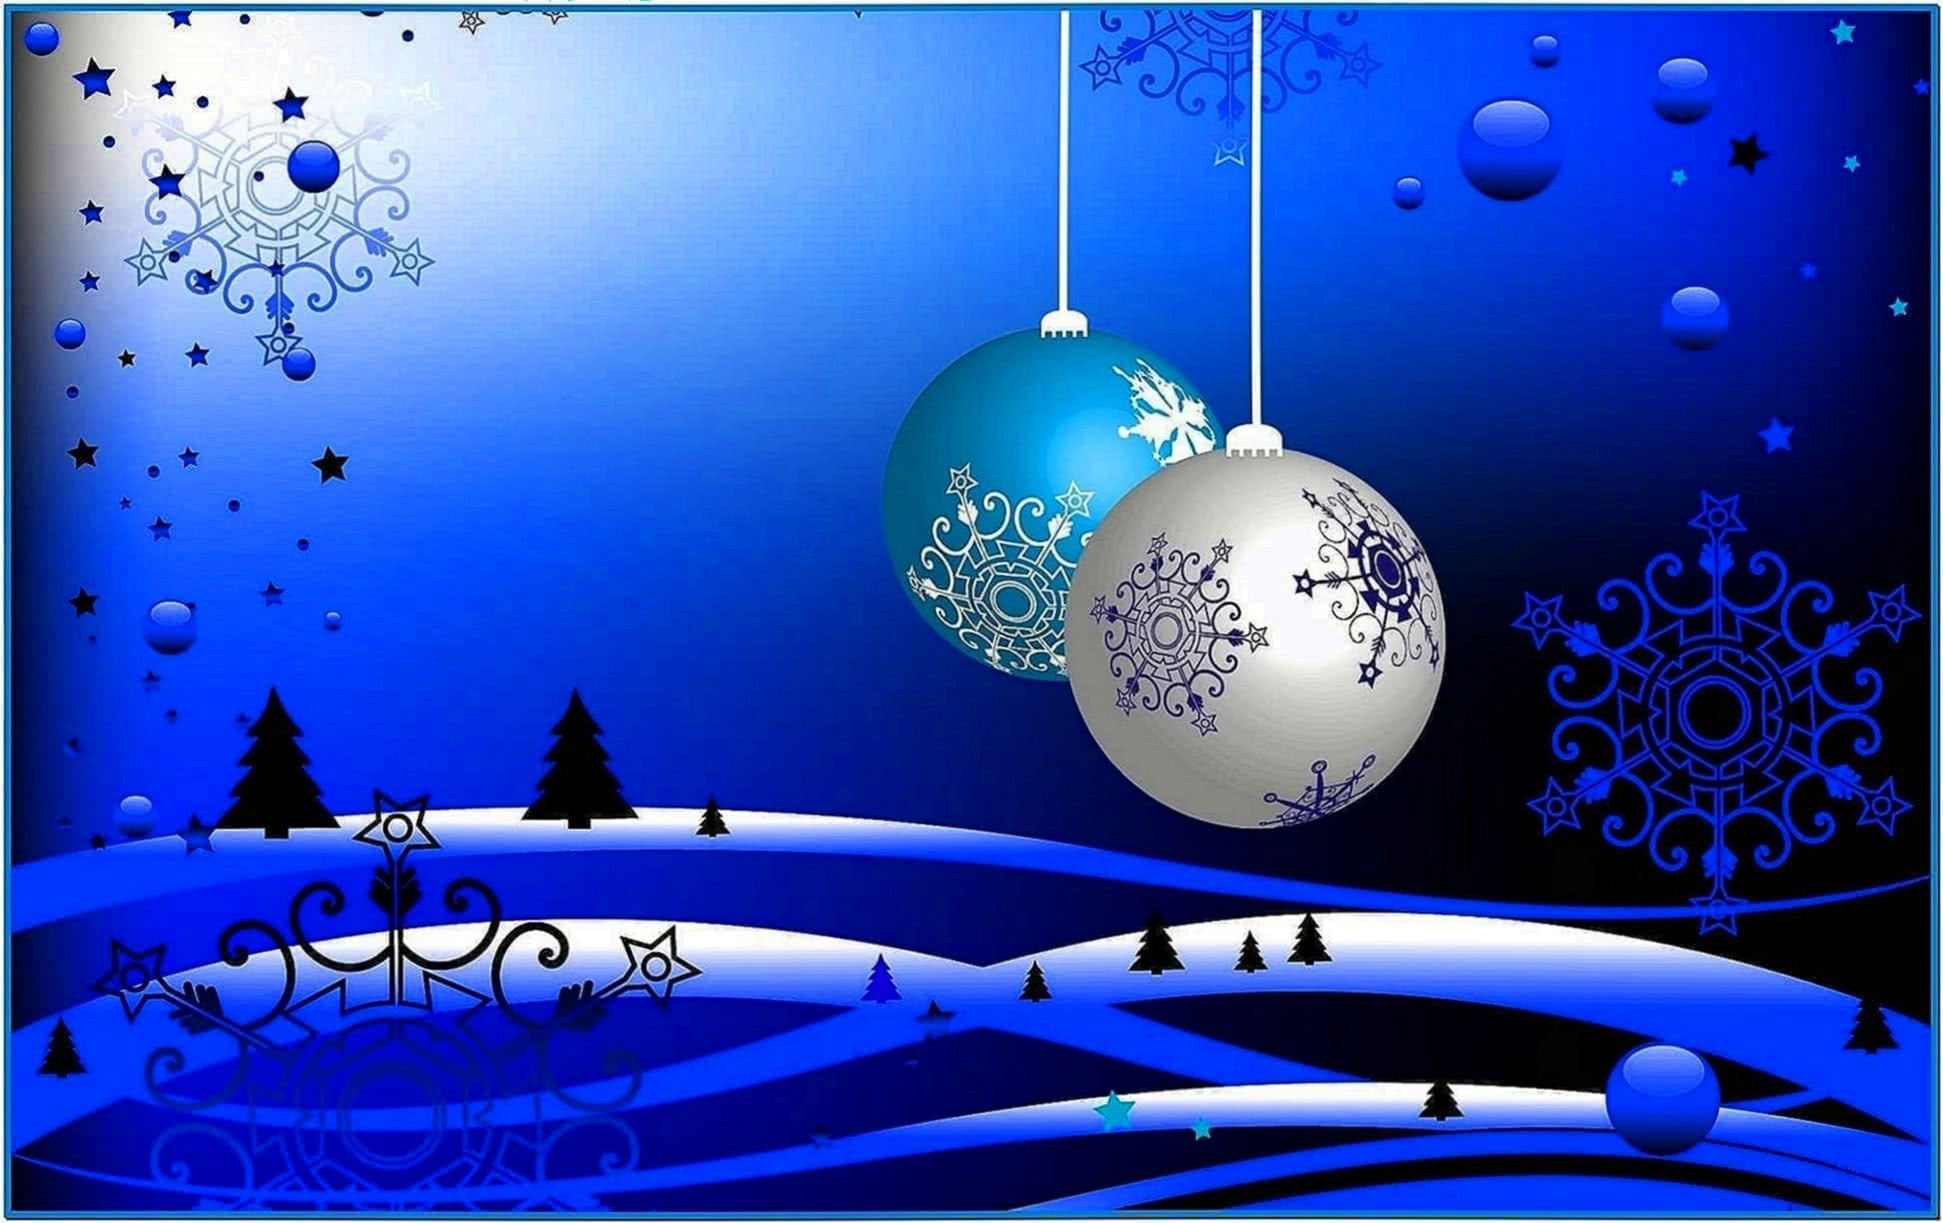 Christmas desktop backgrounds screensavers - Download free